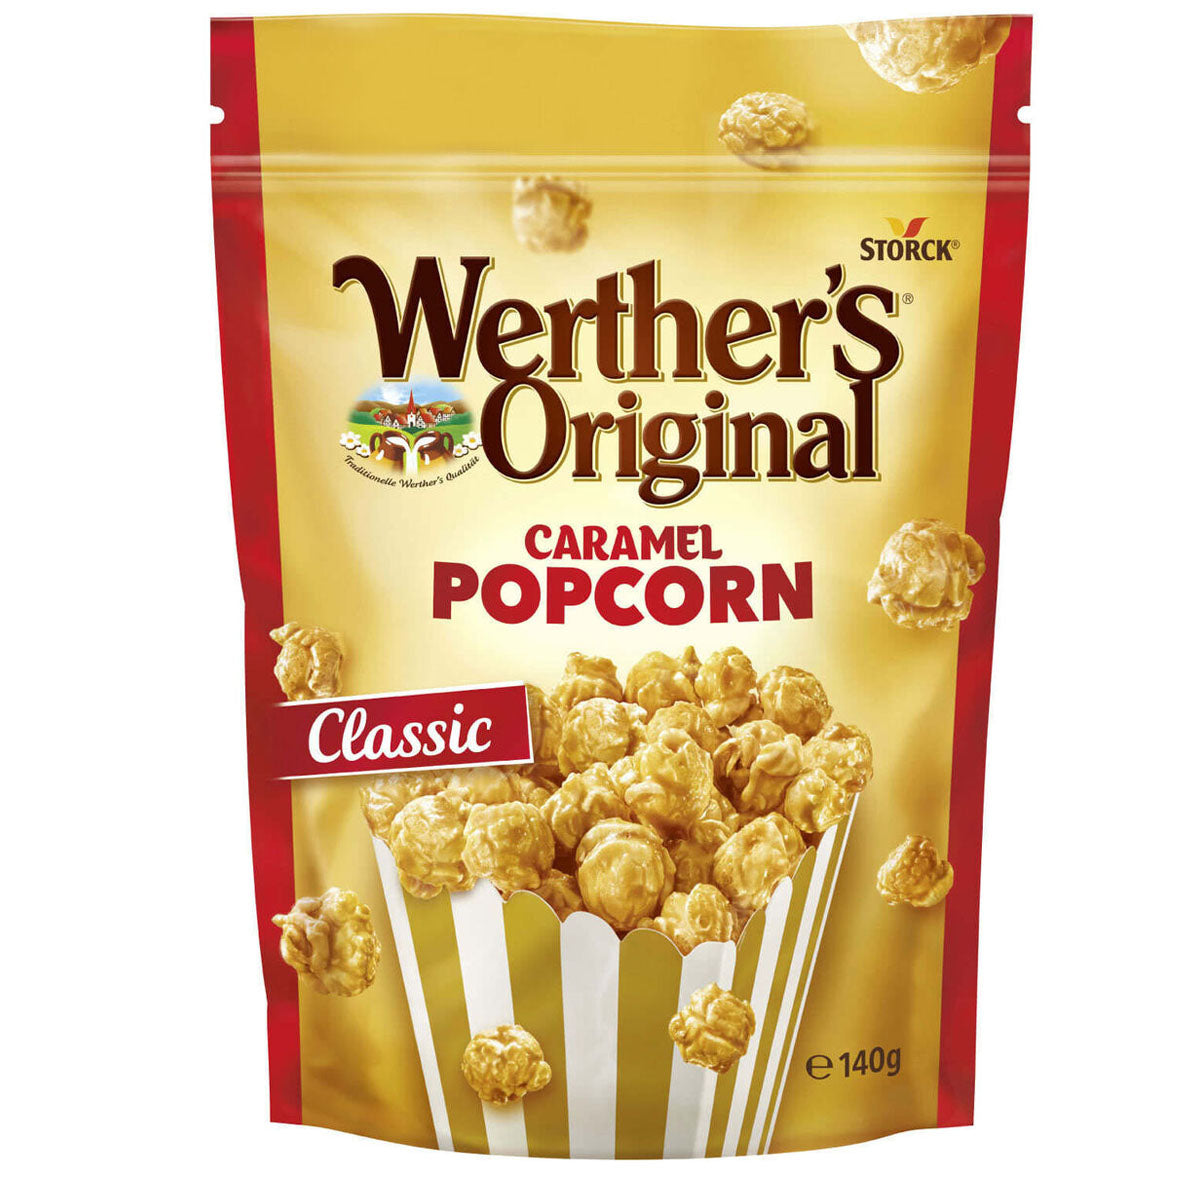 Werther's Original - Caramel Popcorn Classic - 140g dalmation popcorn.